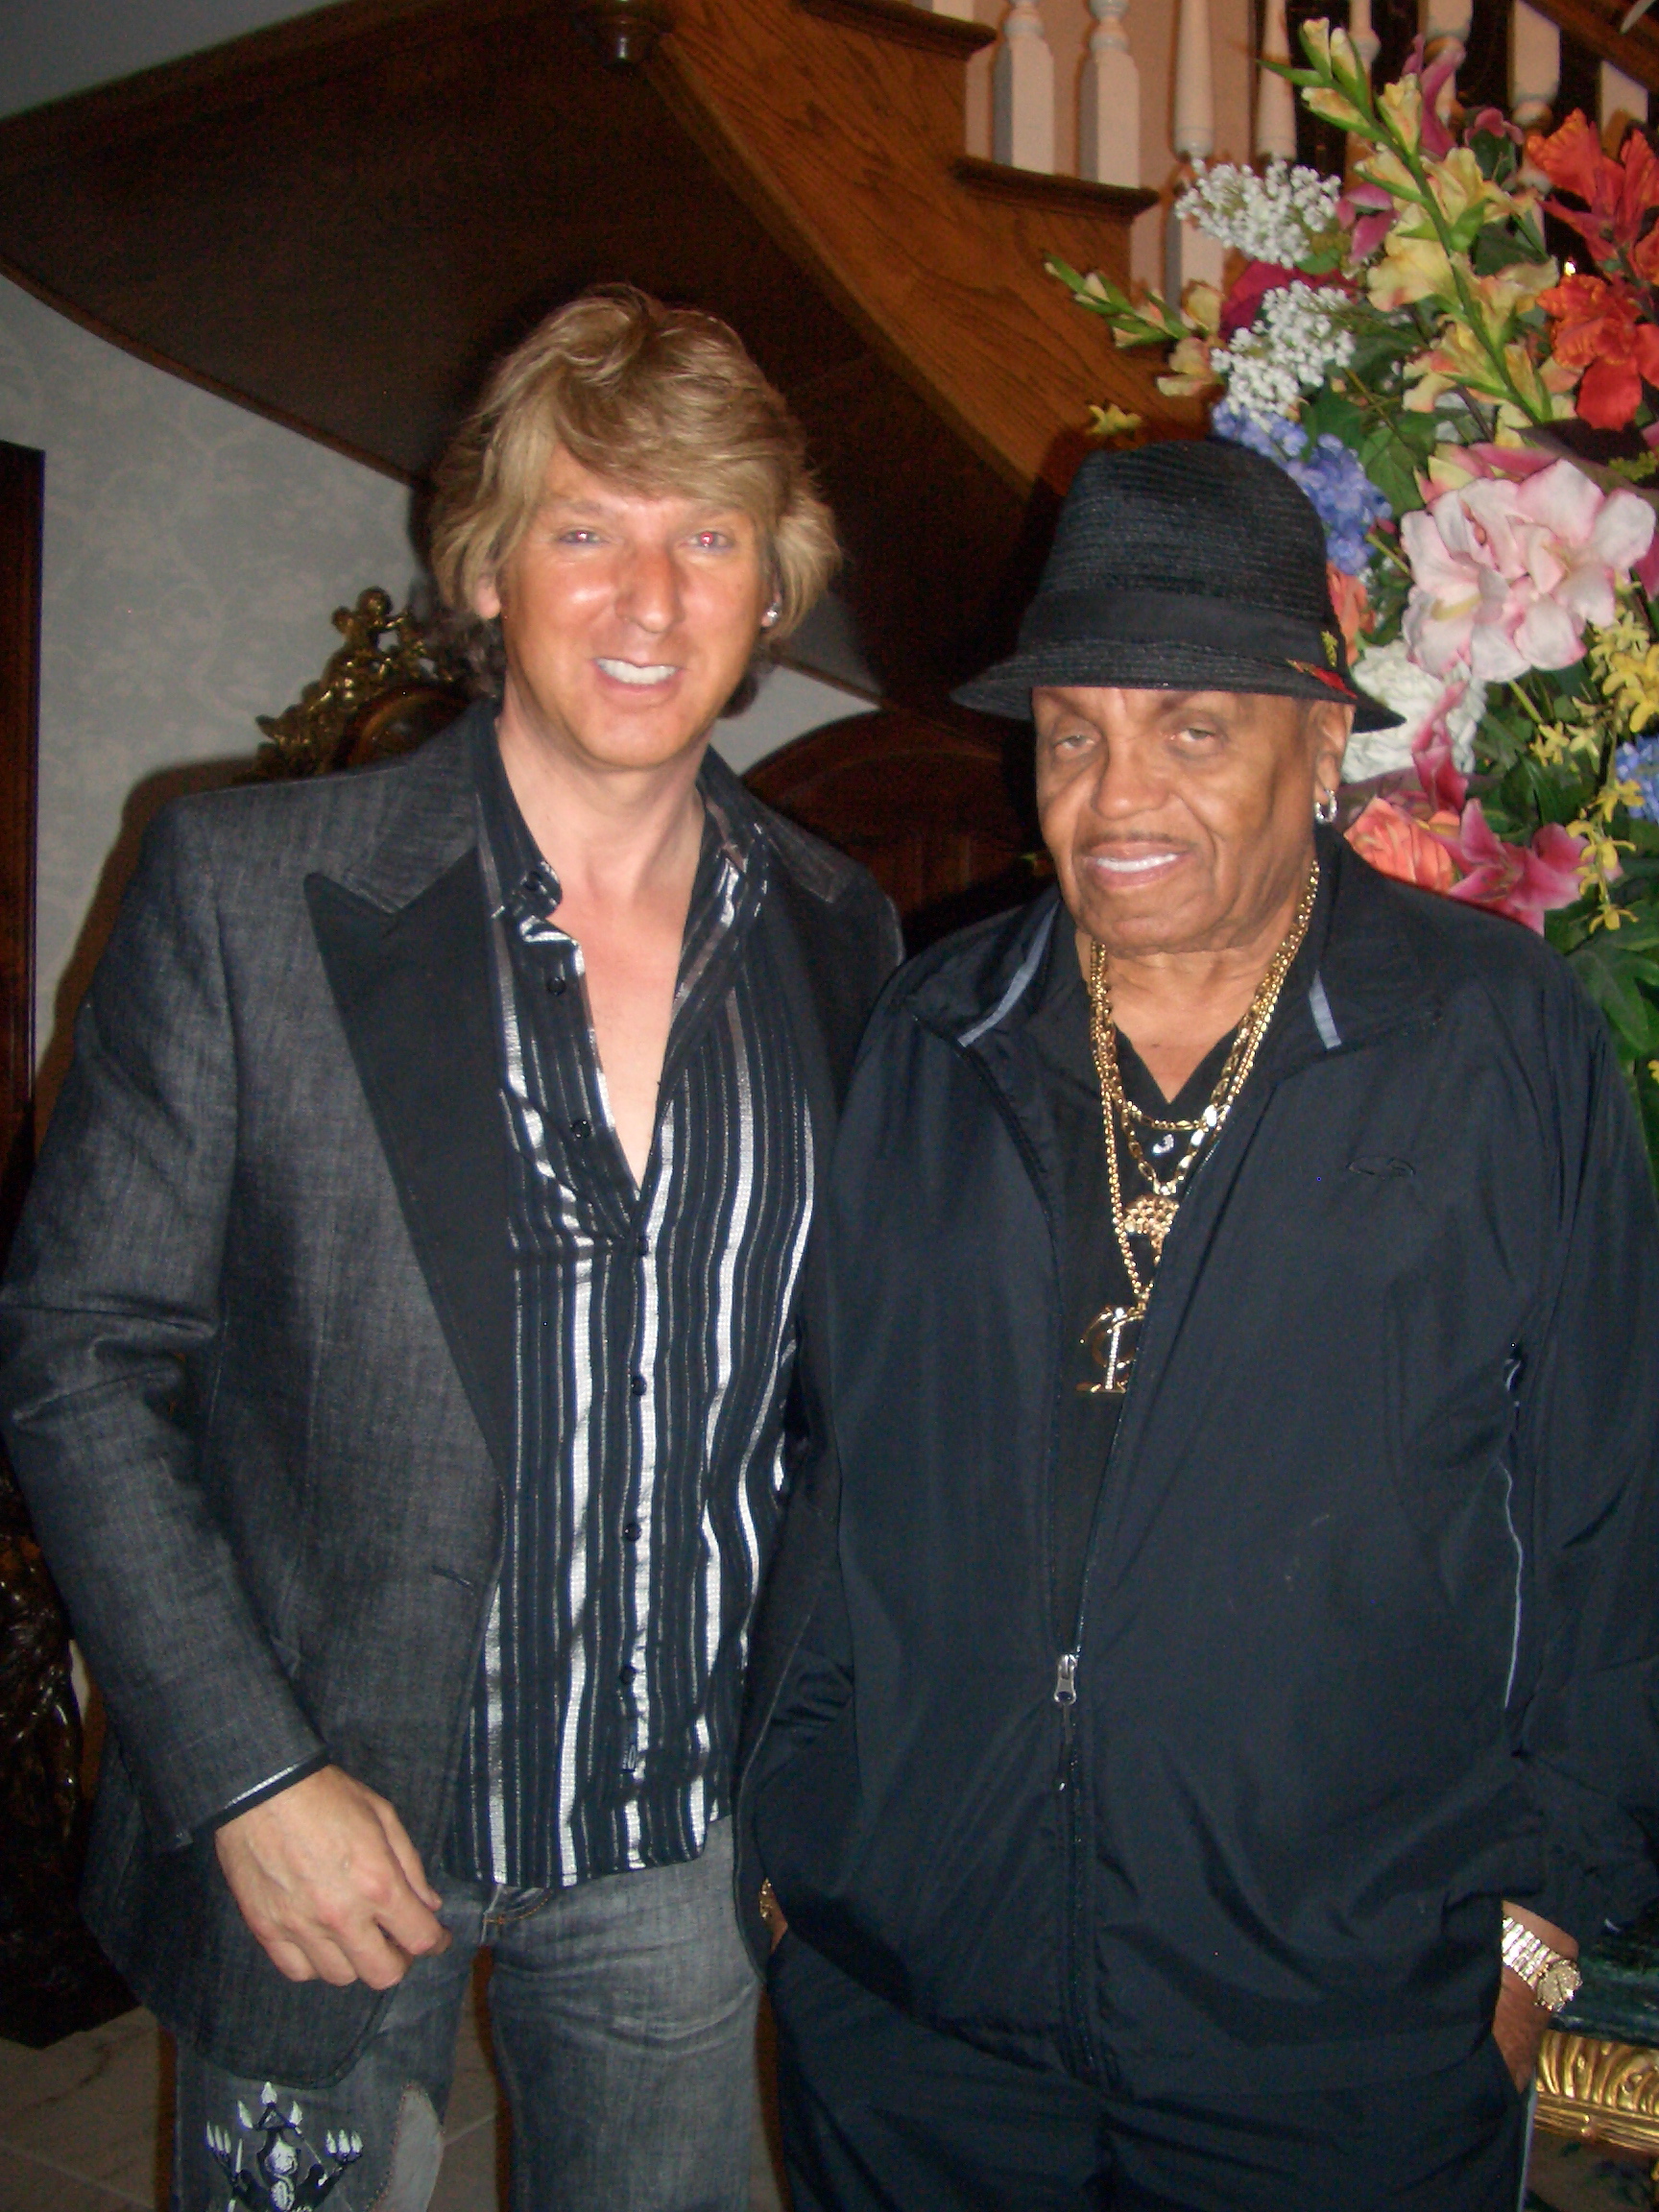 Michael Blakey and Joe Jackson at MJ's Havenhurst house